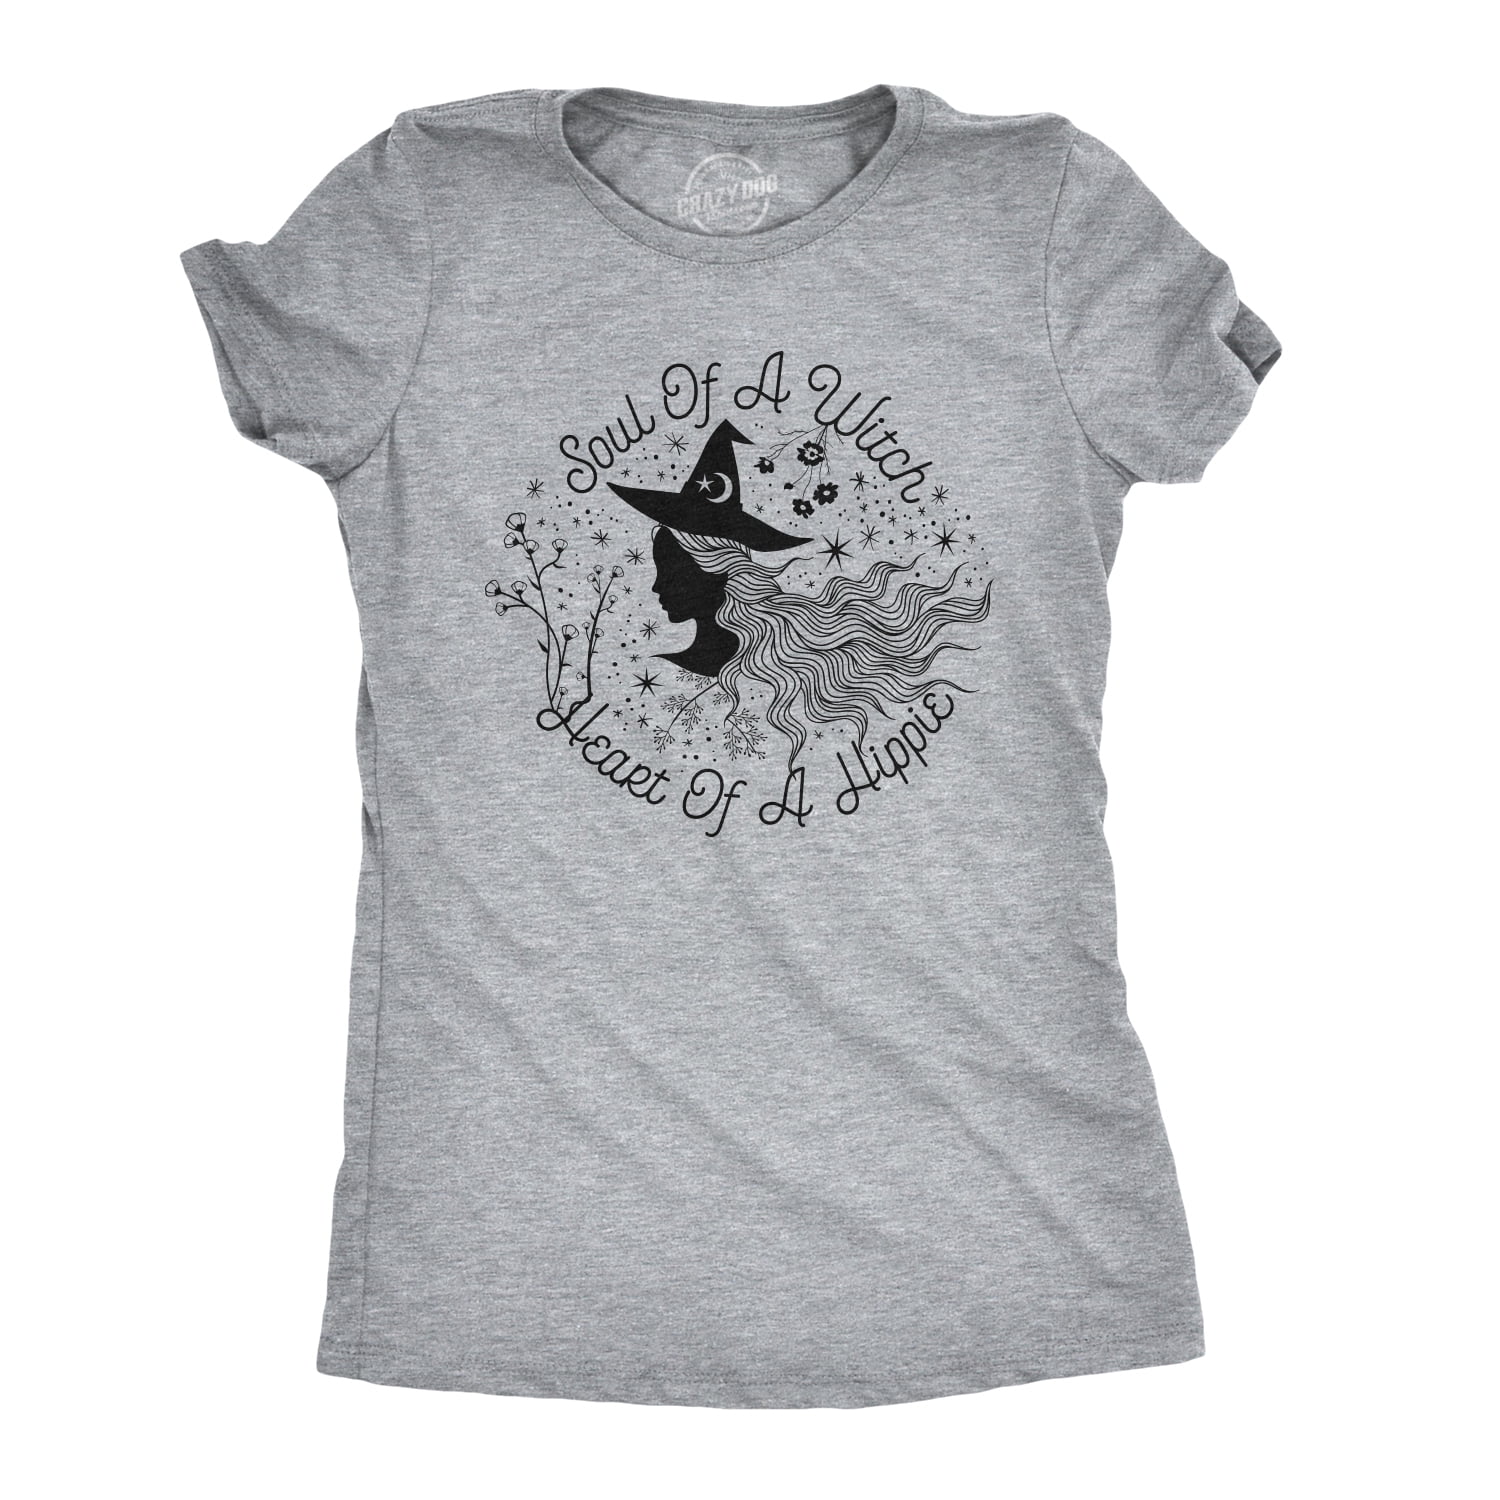 Hocus Pocus Shirt Happy Halloween Shirt Funny Halloween Shirts Basic Witch Shirt Witch Shirt Creep It Real